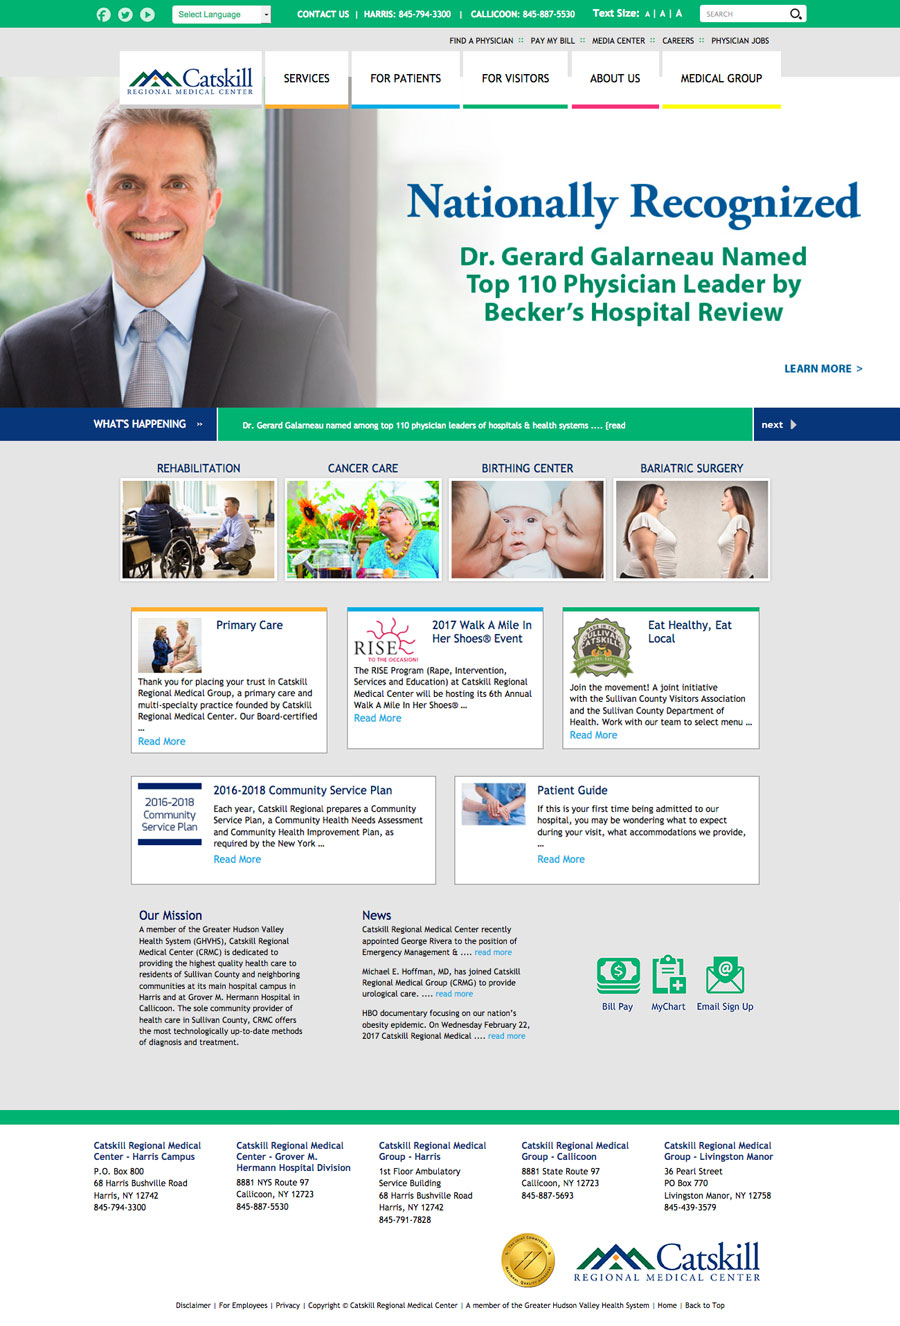 Catskill Regional Medical Center Website Design and Development